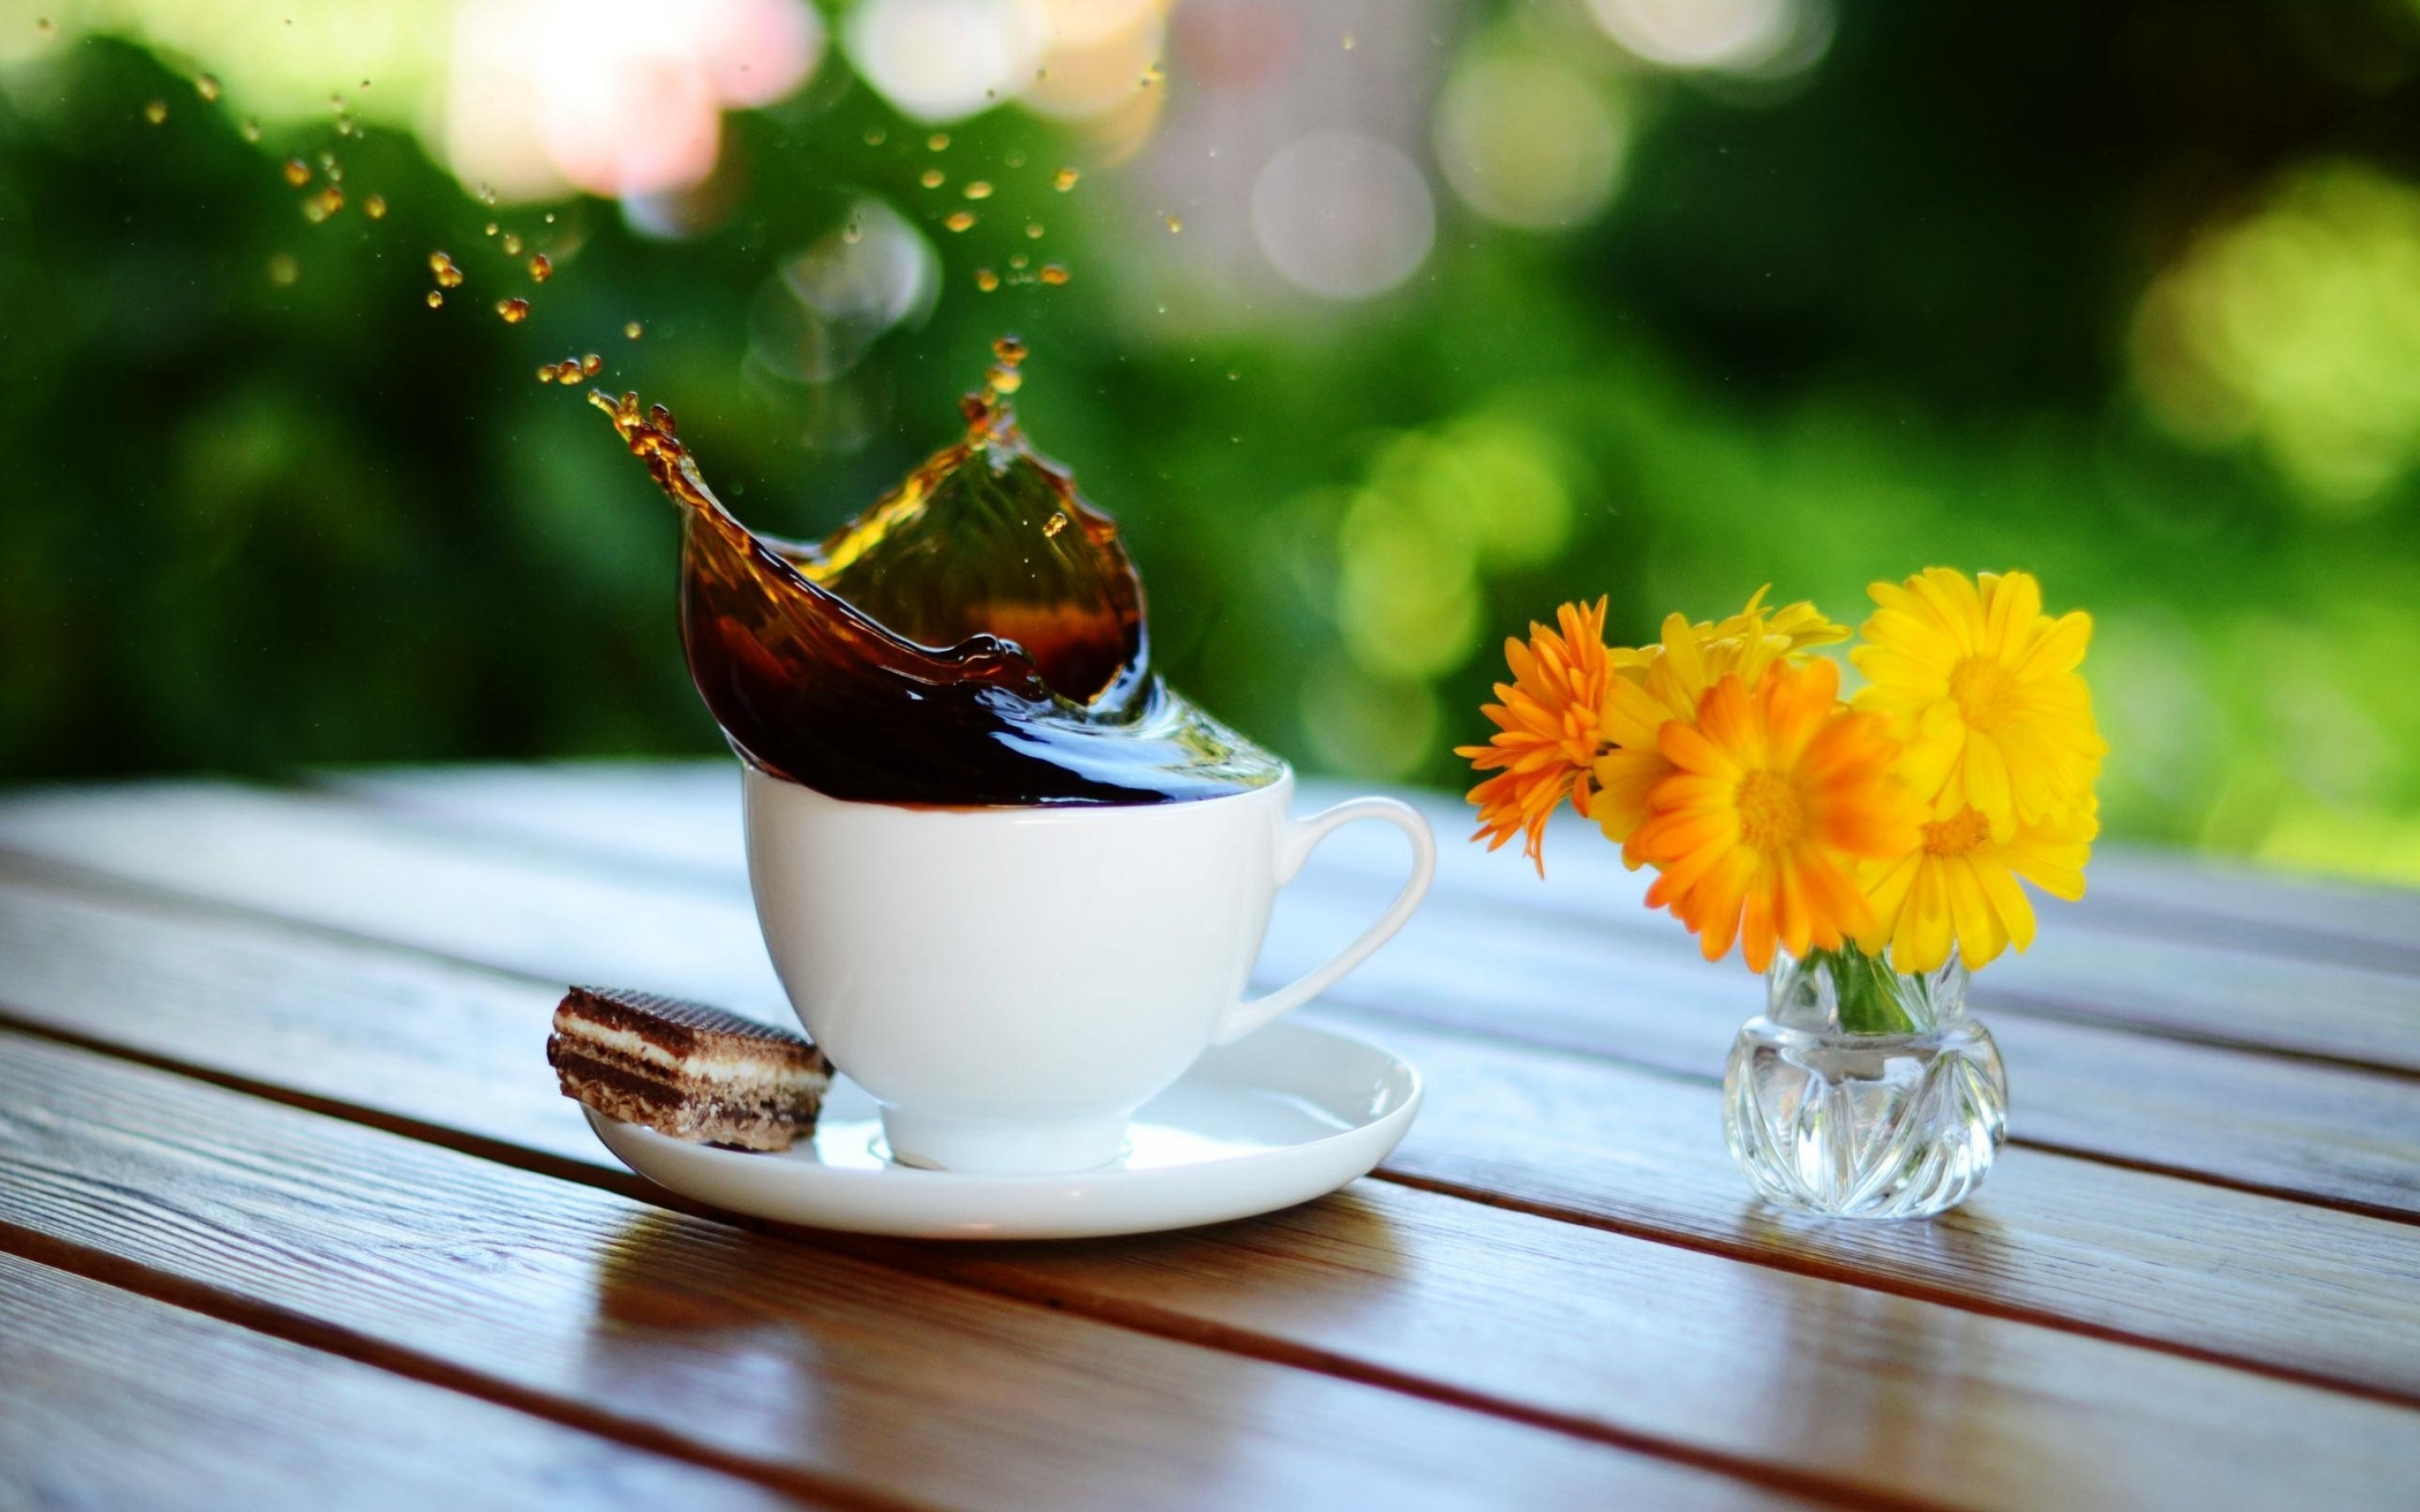 Картинка: Чашка кофе, всплеск, брызги, пироженое, цветочки, стол